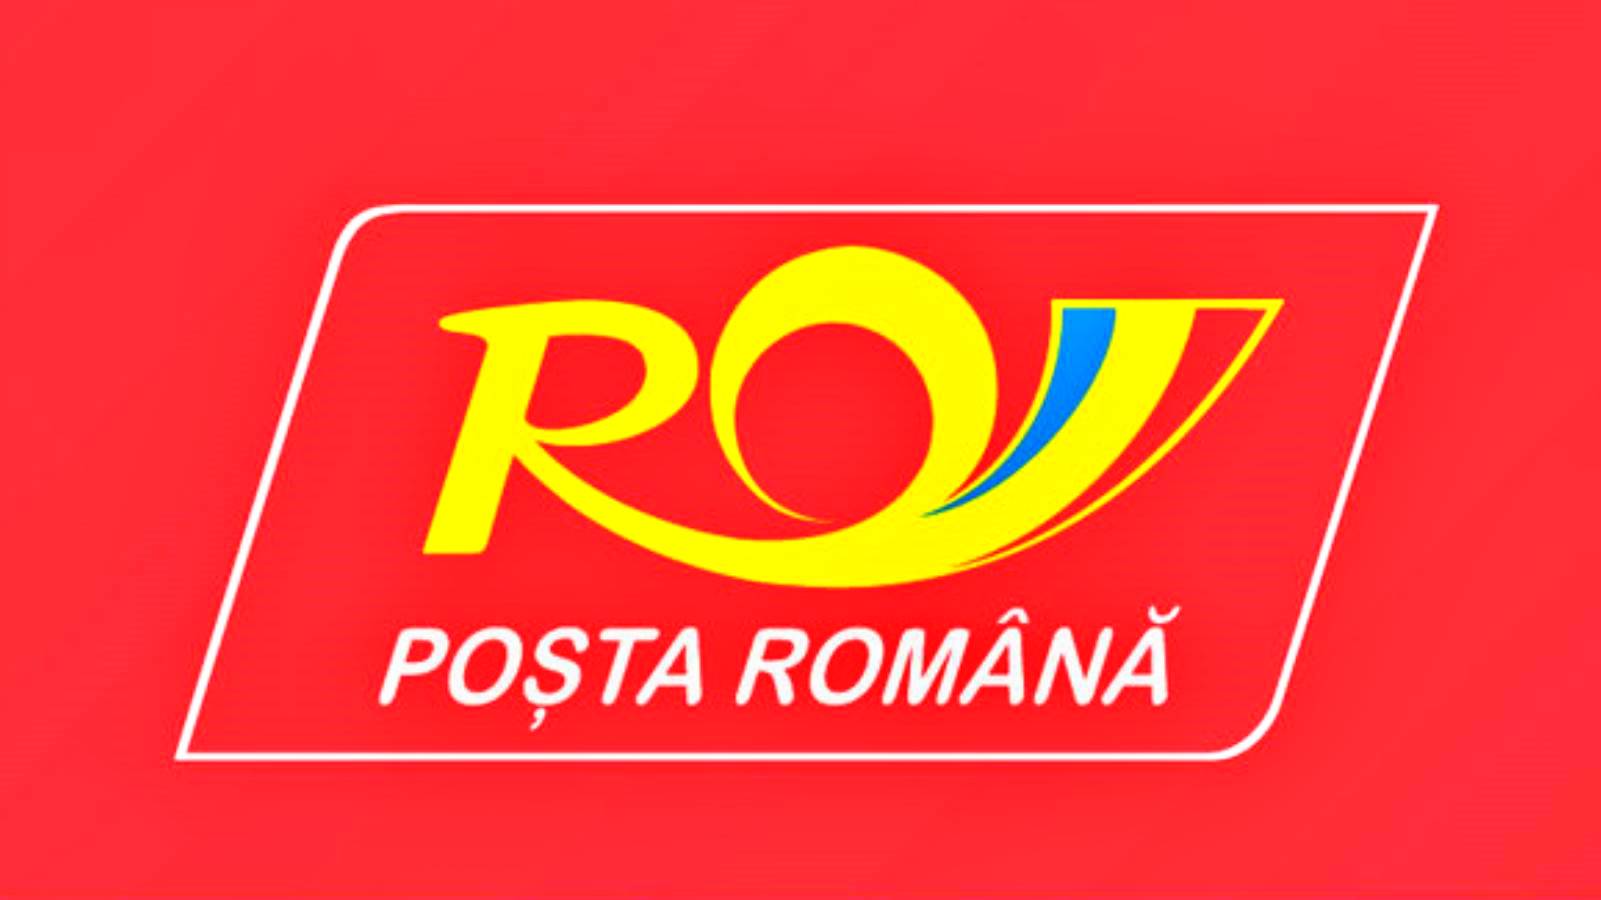 Roemeense post Goedkope levering Producten besteld tussenproduct OLX